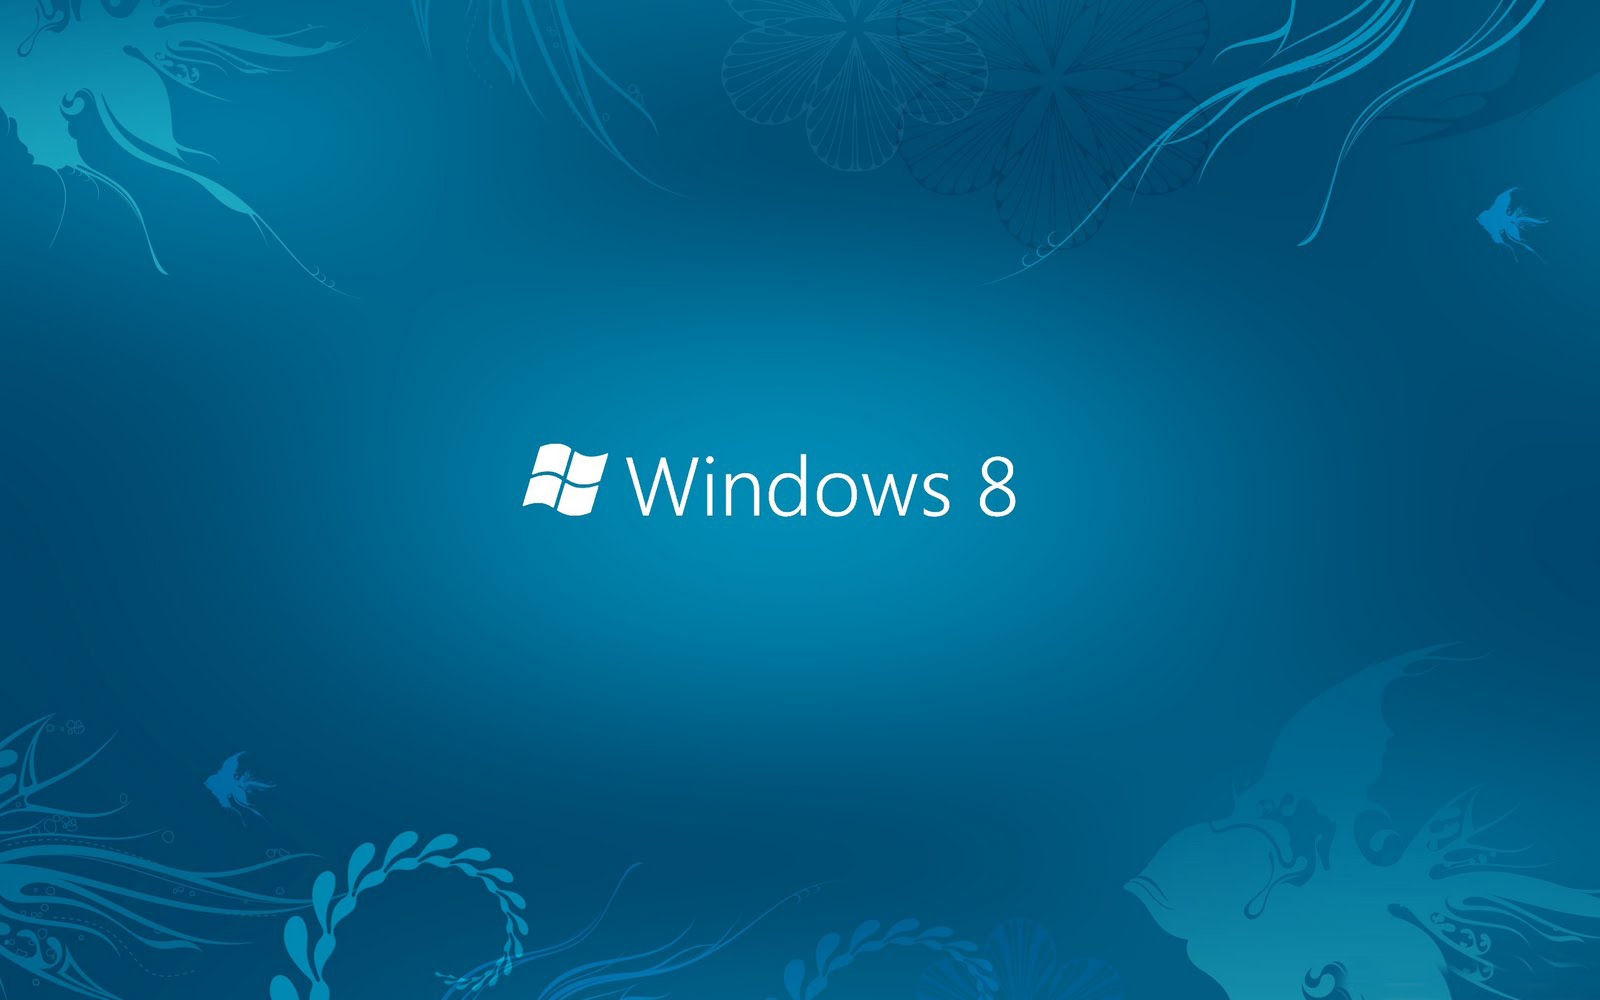 Ashley Wallpaper Windows 8 New Wallpaper Hd For Desktop Free